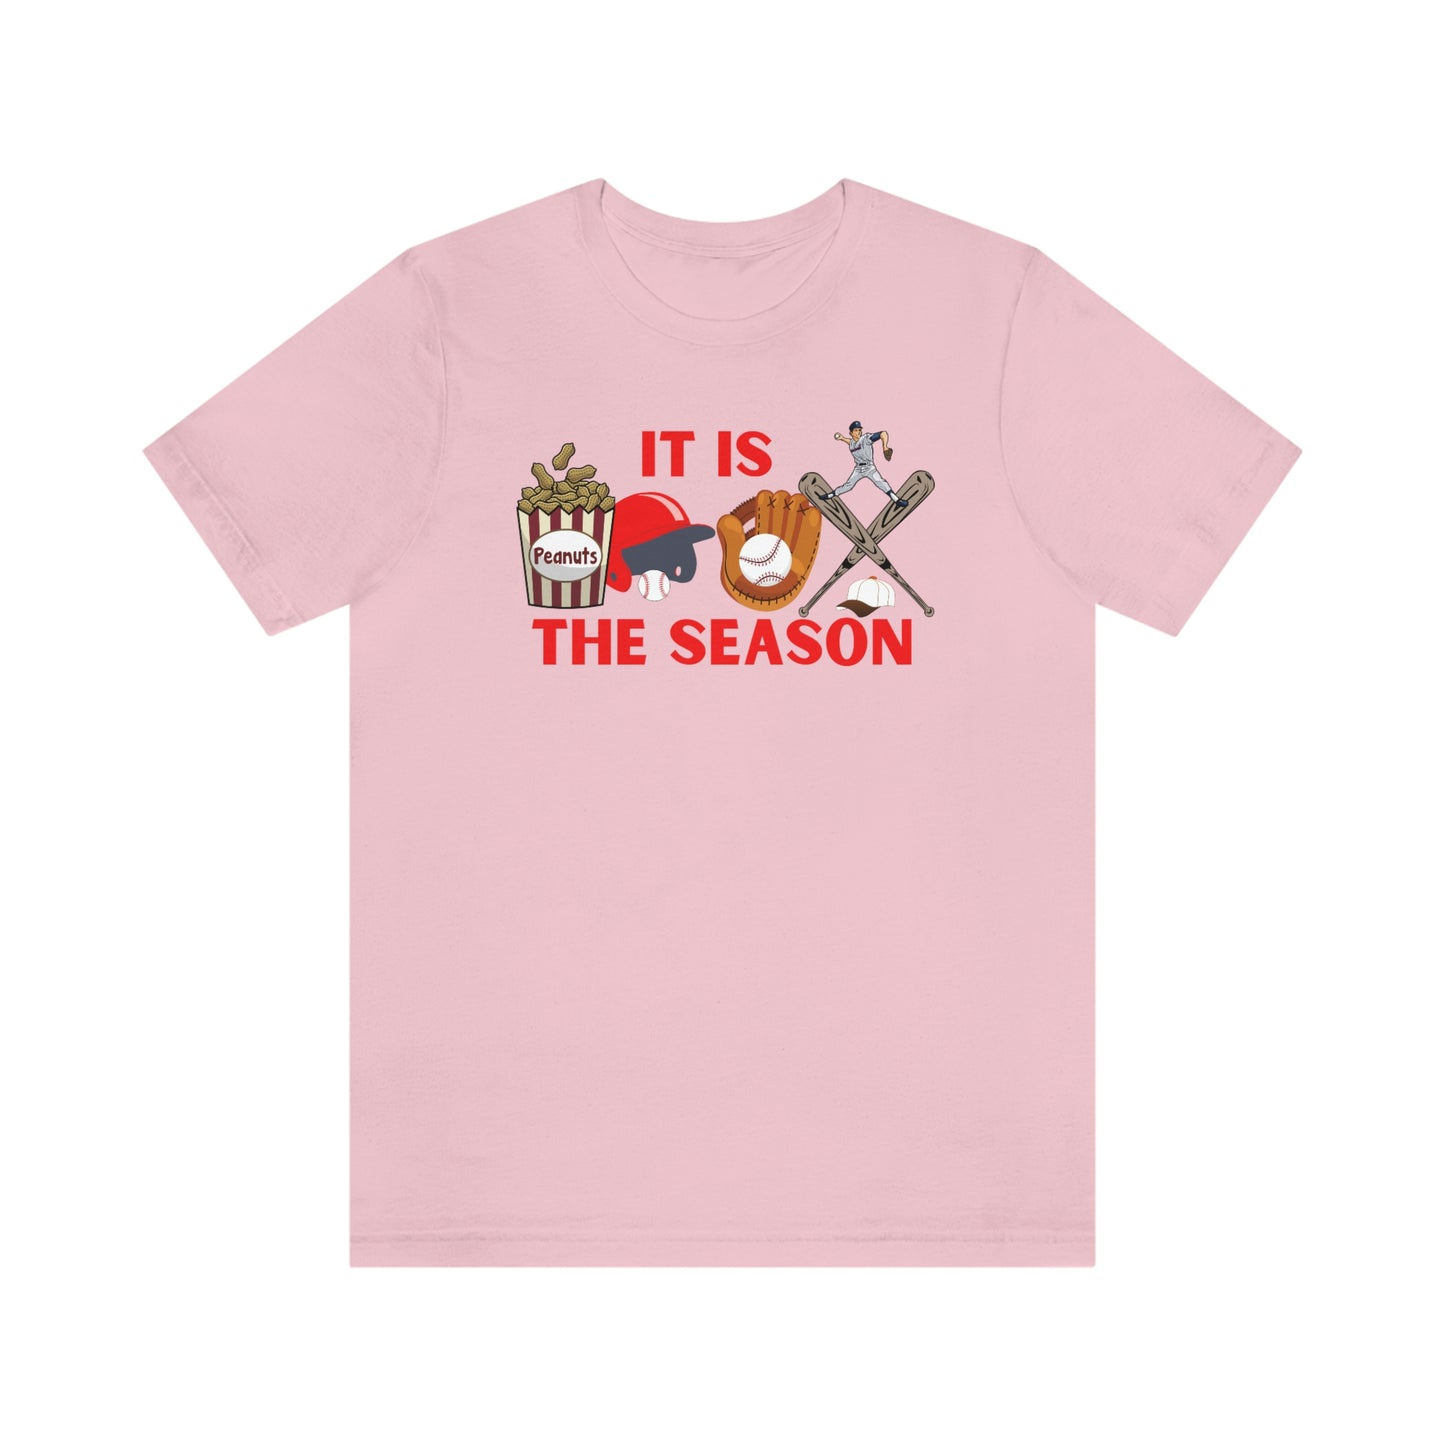 It is the season Baseball shirt baseball tee baseball tshirt - Sport shirt Baseball Mom shirt Baseball Mama shirt gift for him gameday shirt